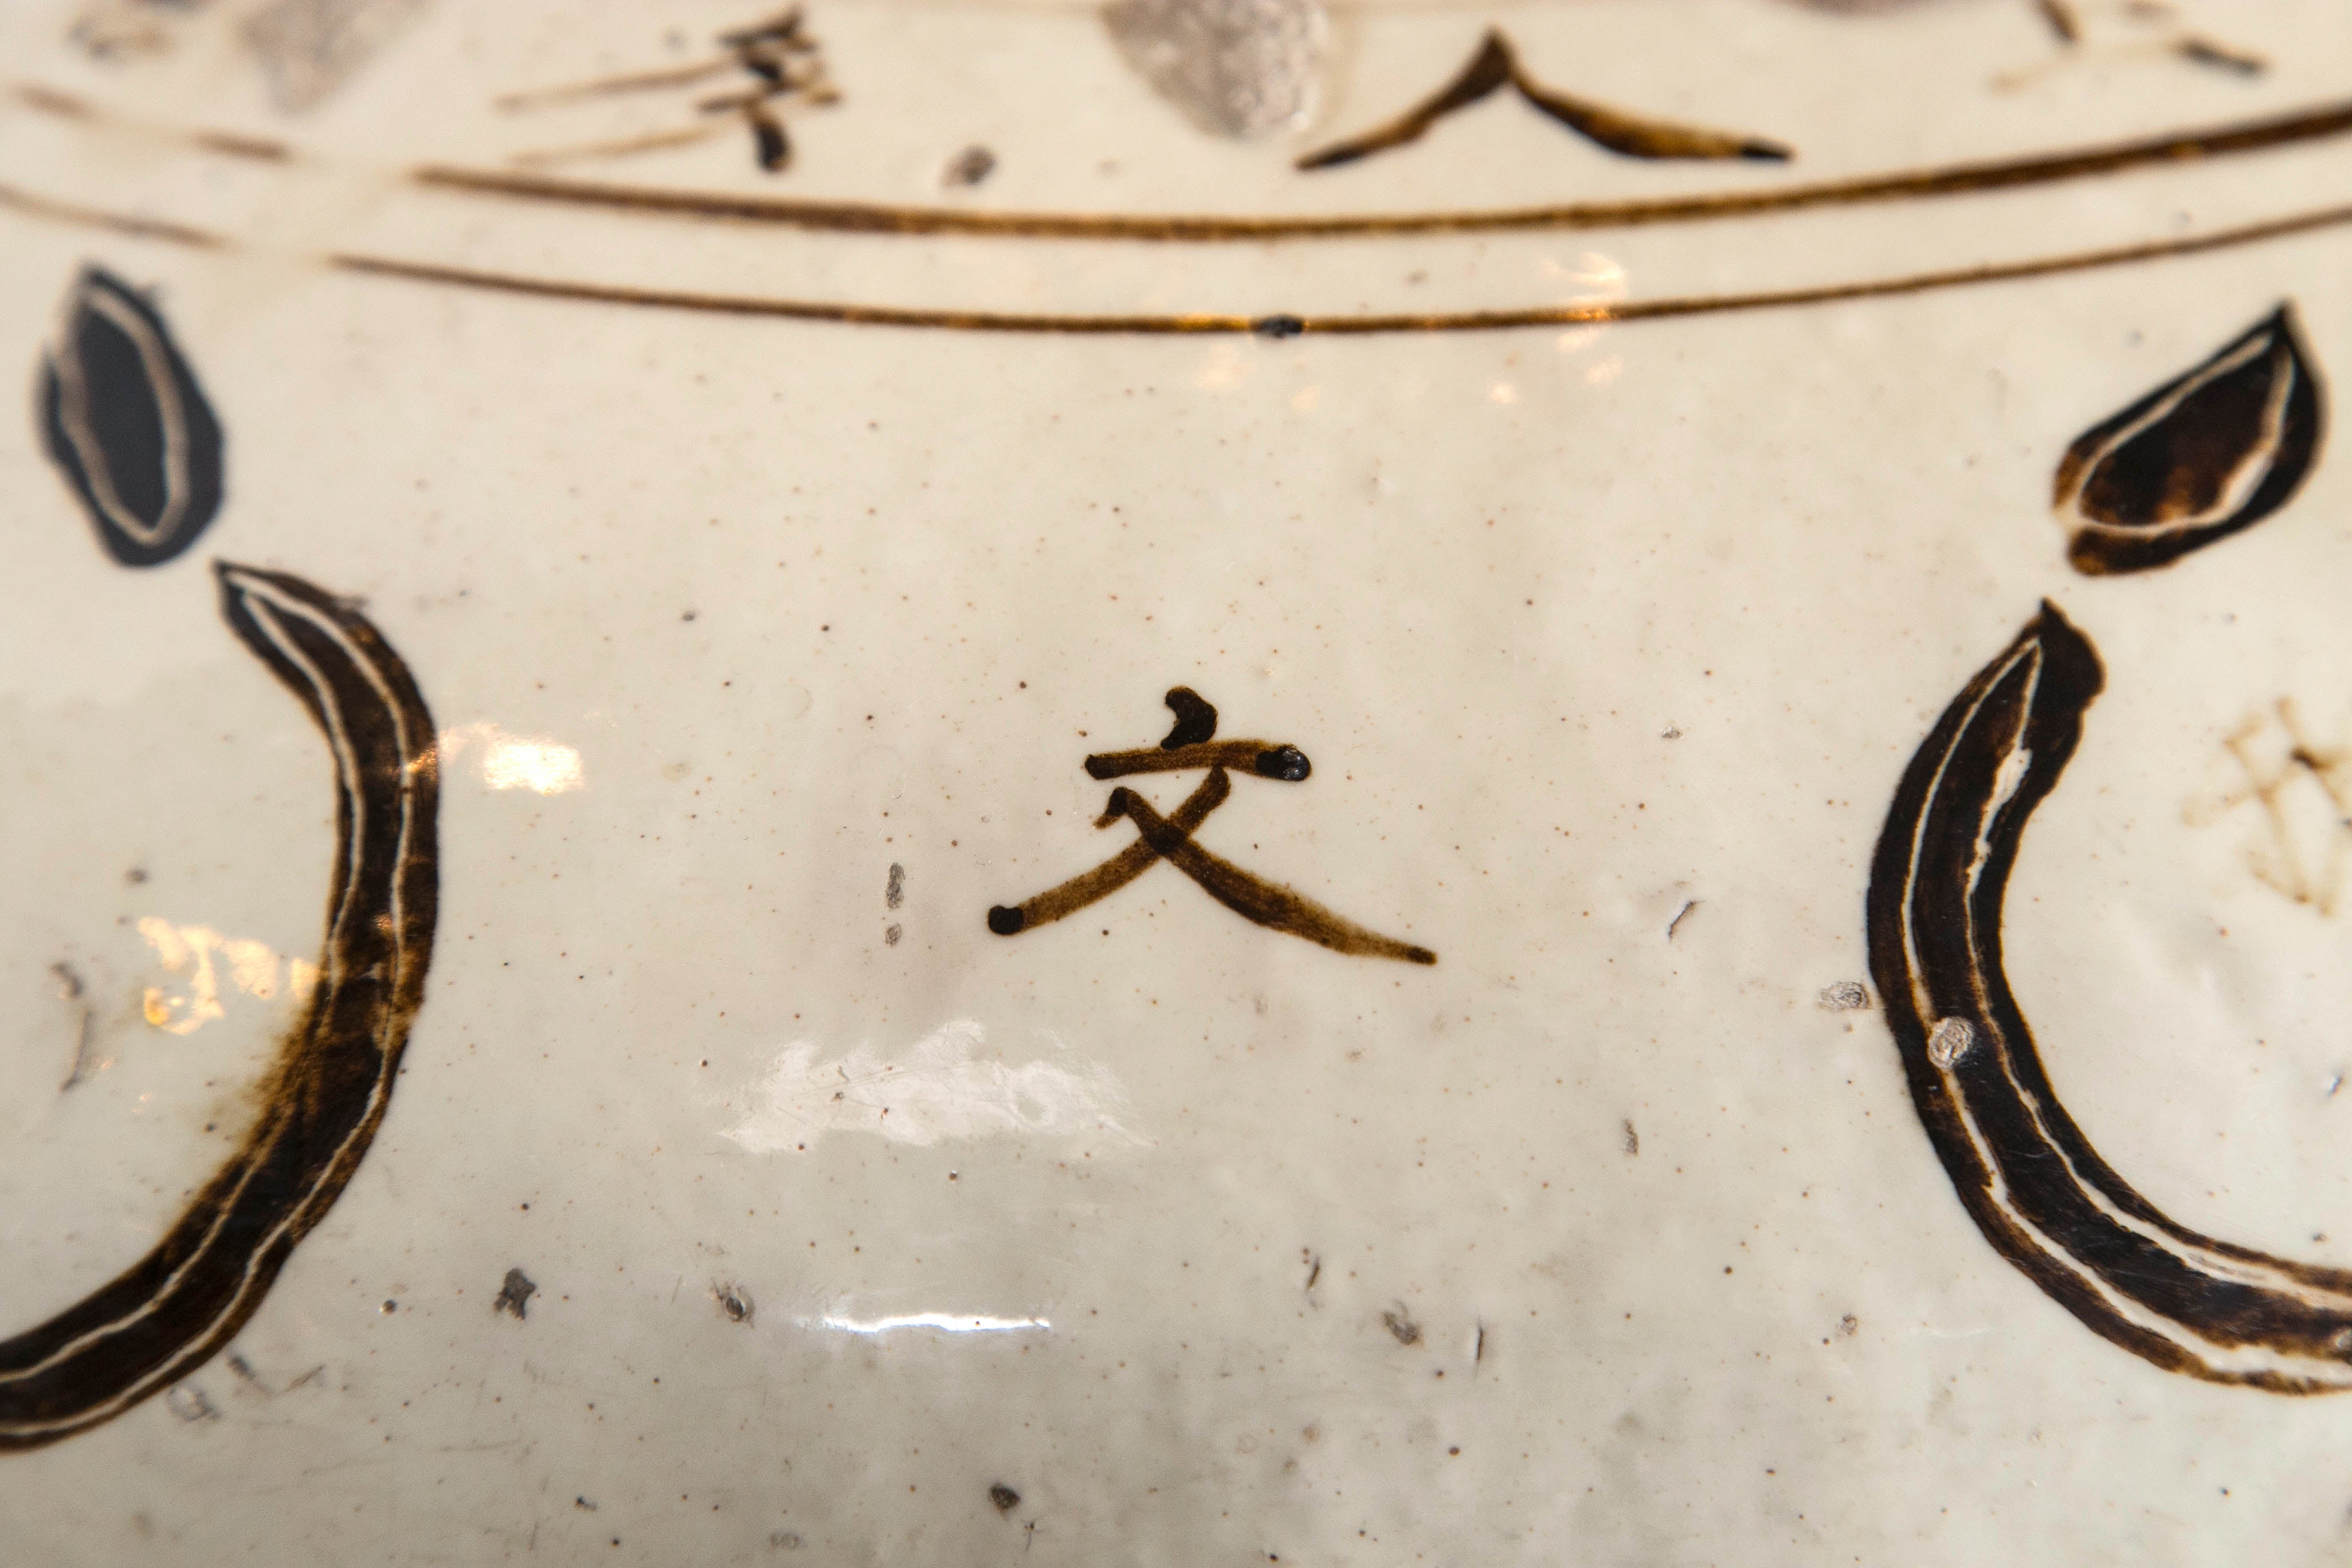 Chinese Pottery Jar